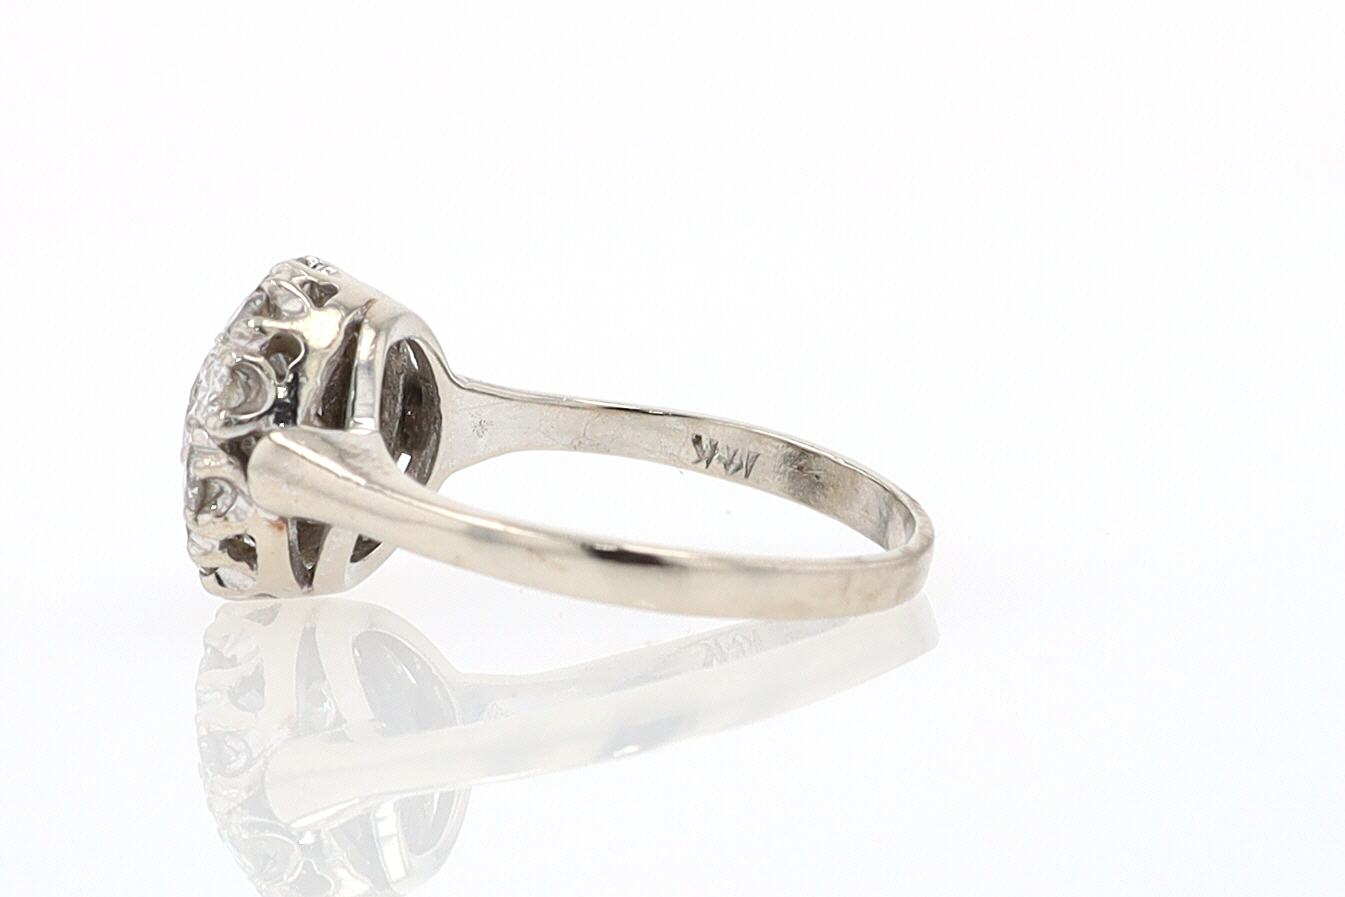 Art Deco 1.25 Carats Round Diamond Engagement Ring